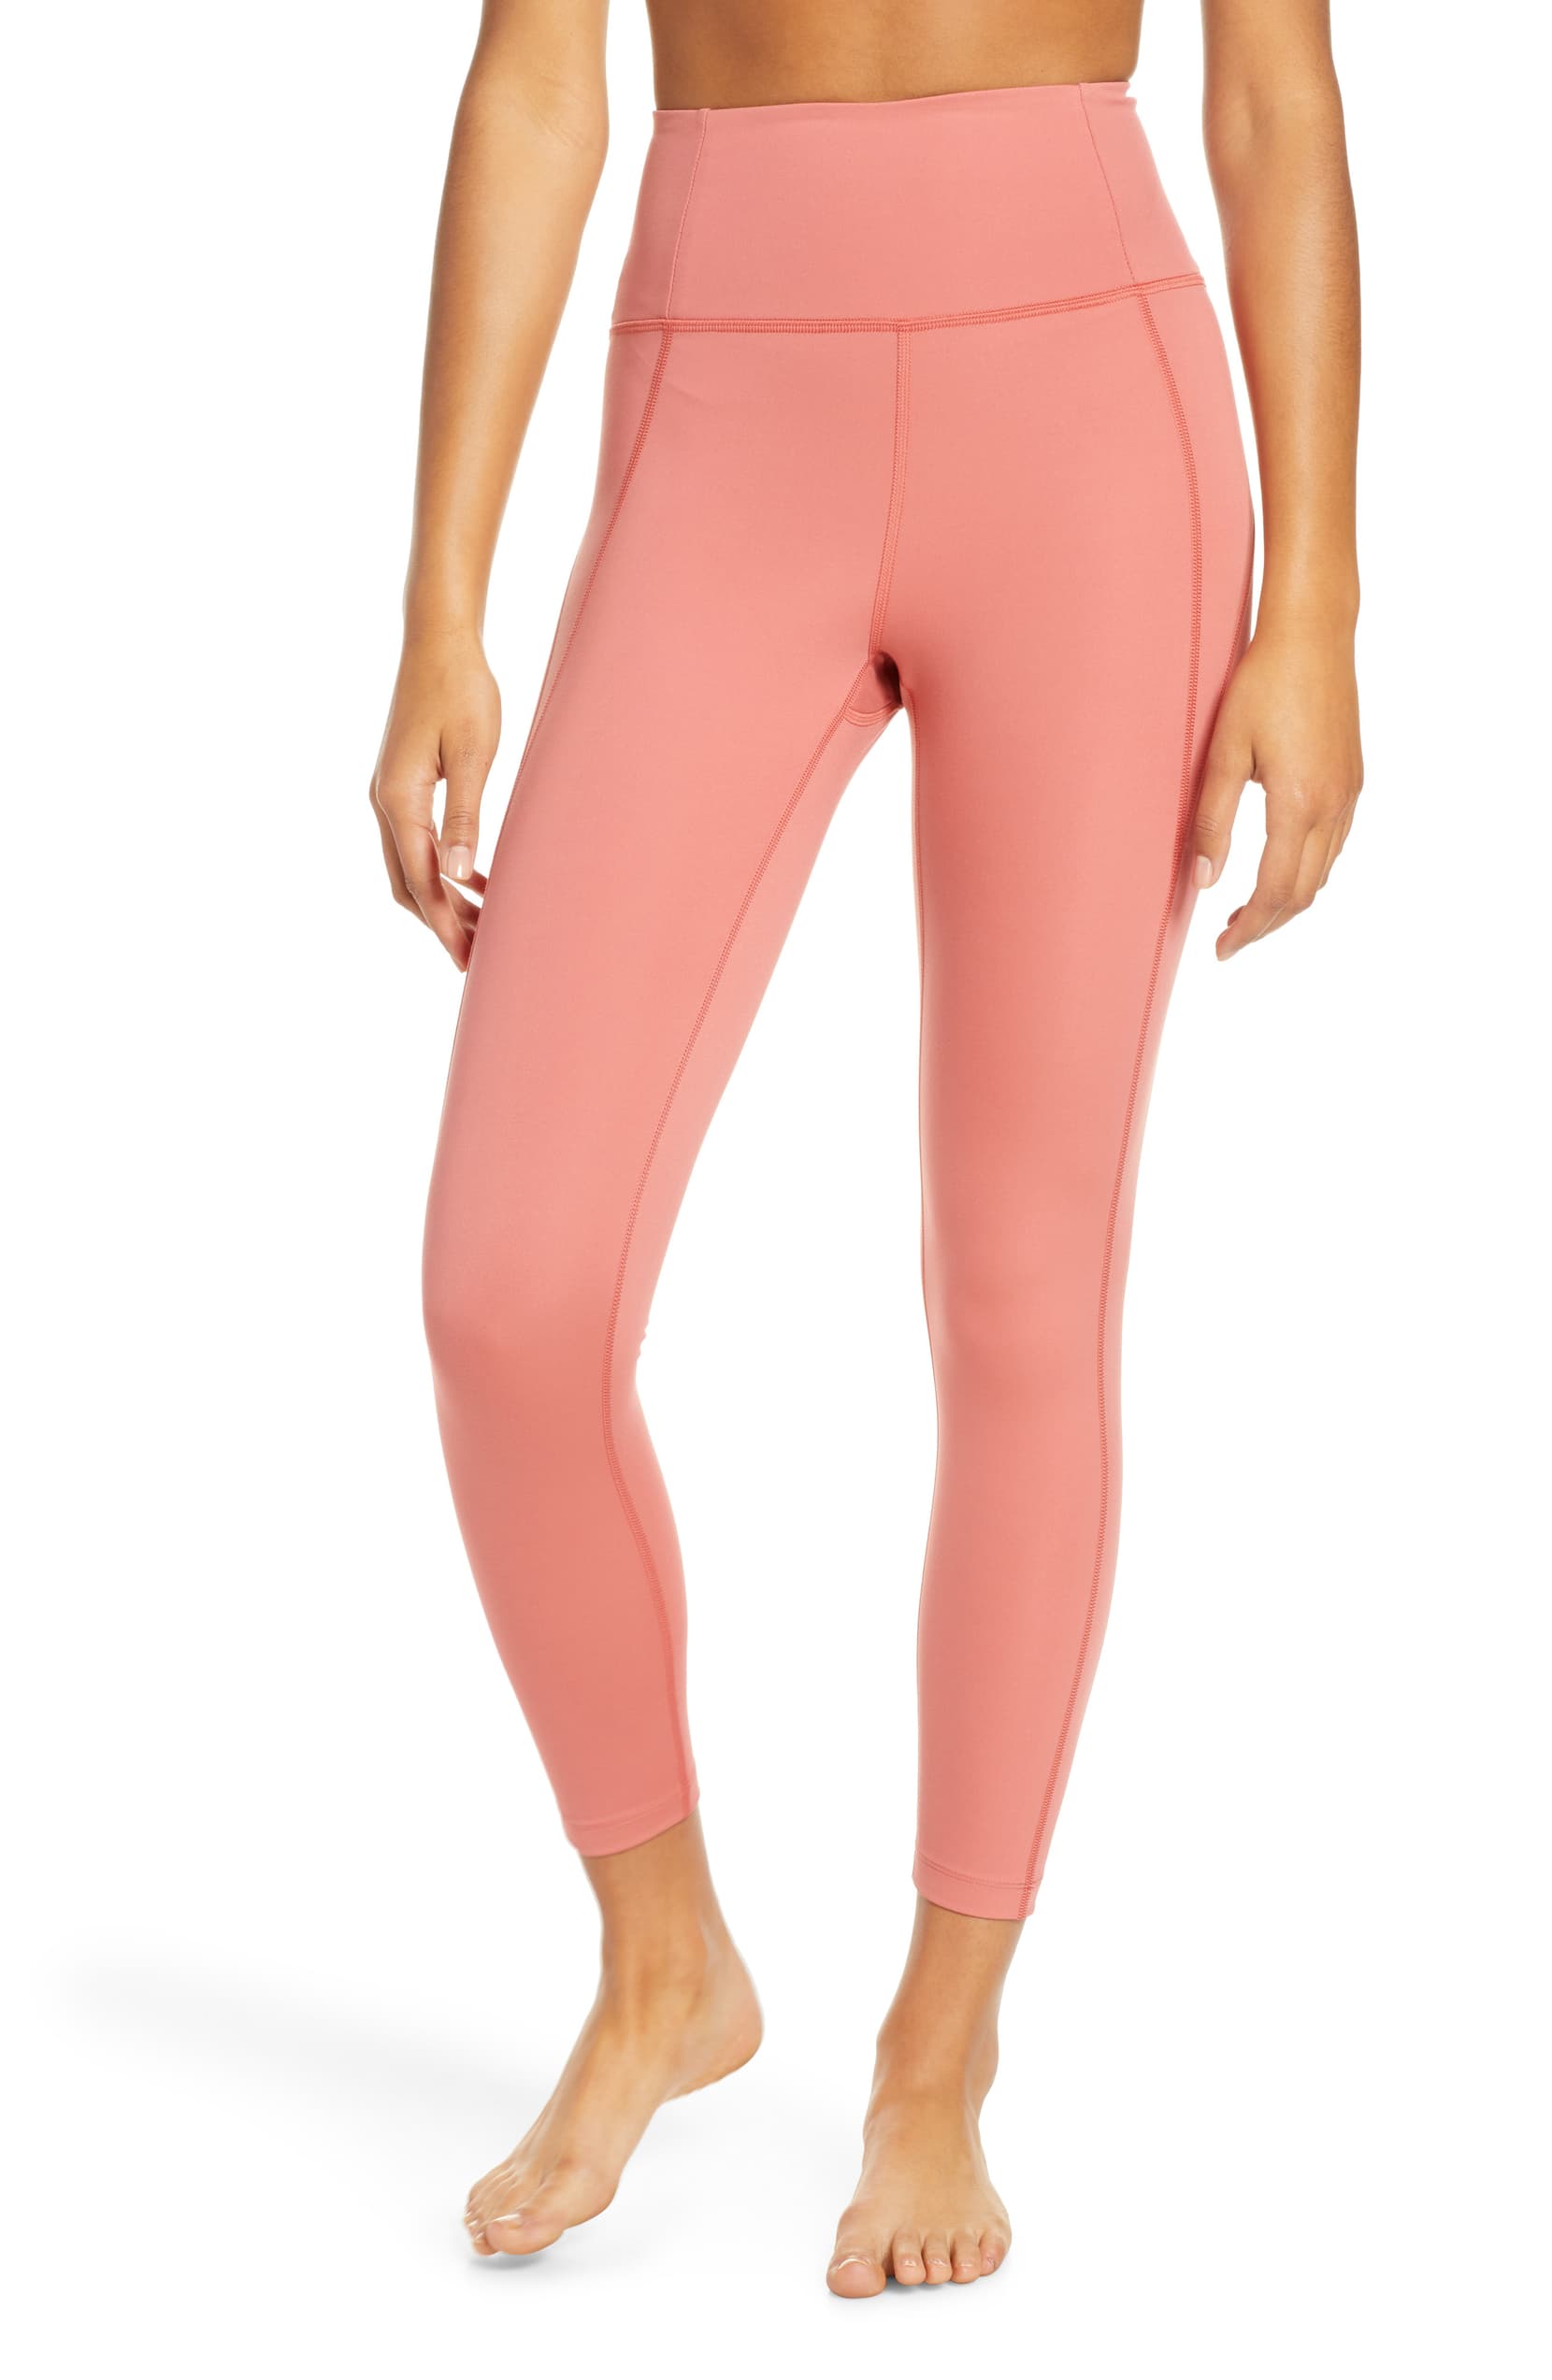 pink exercise leggings